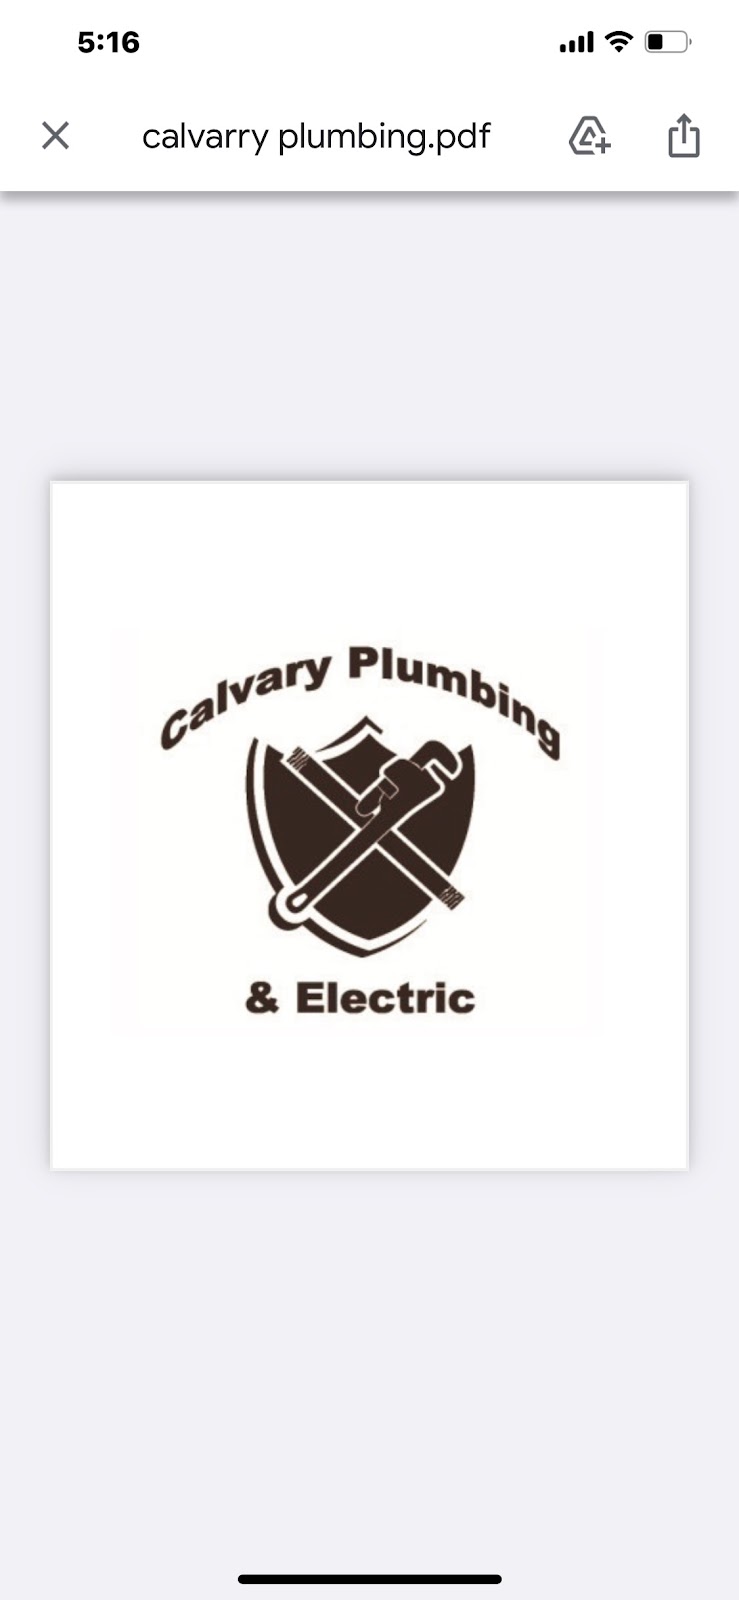 Calvary Plumbing & Electric | 2184 Snow Hill Falls Rd, Cresco, PA 18326 | Phone: (570) 234-8197